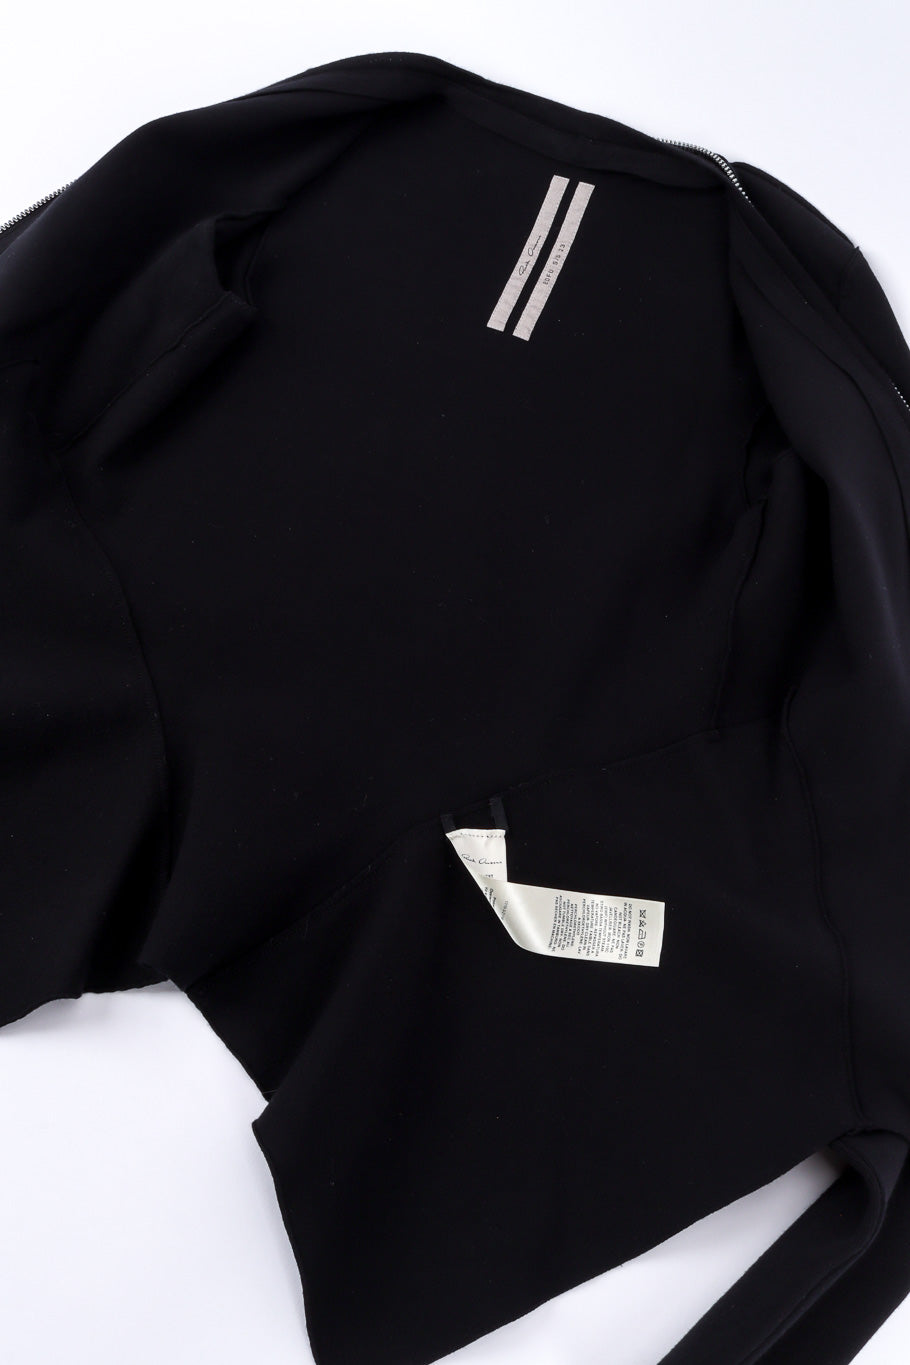 2023 S/S EDFU Sculptural Jacket by Rick Owens unzipped lining  @recessla